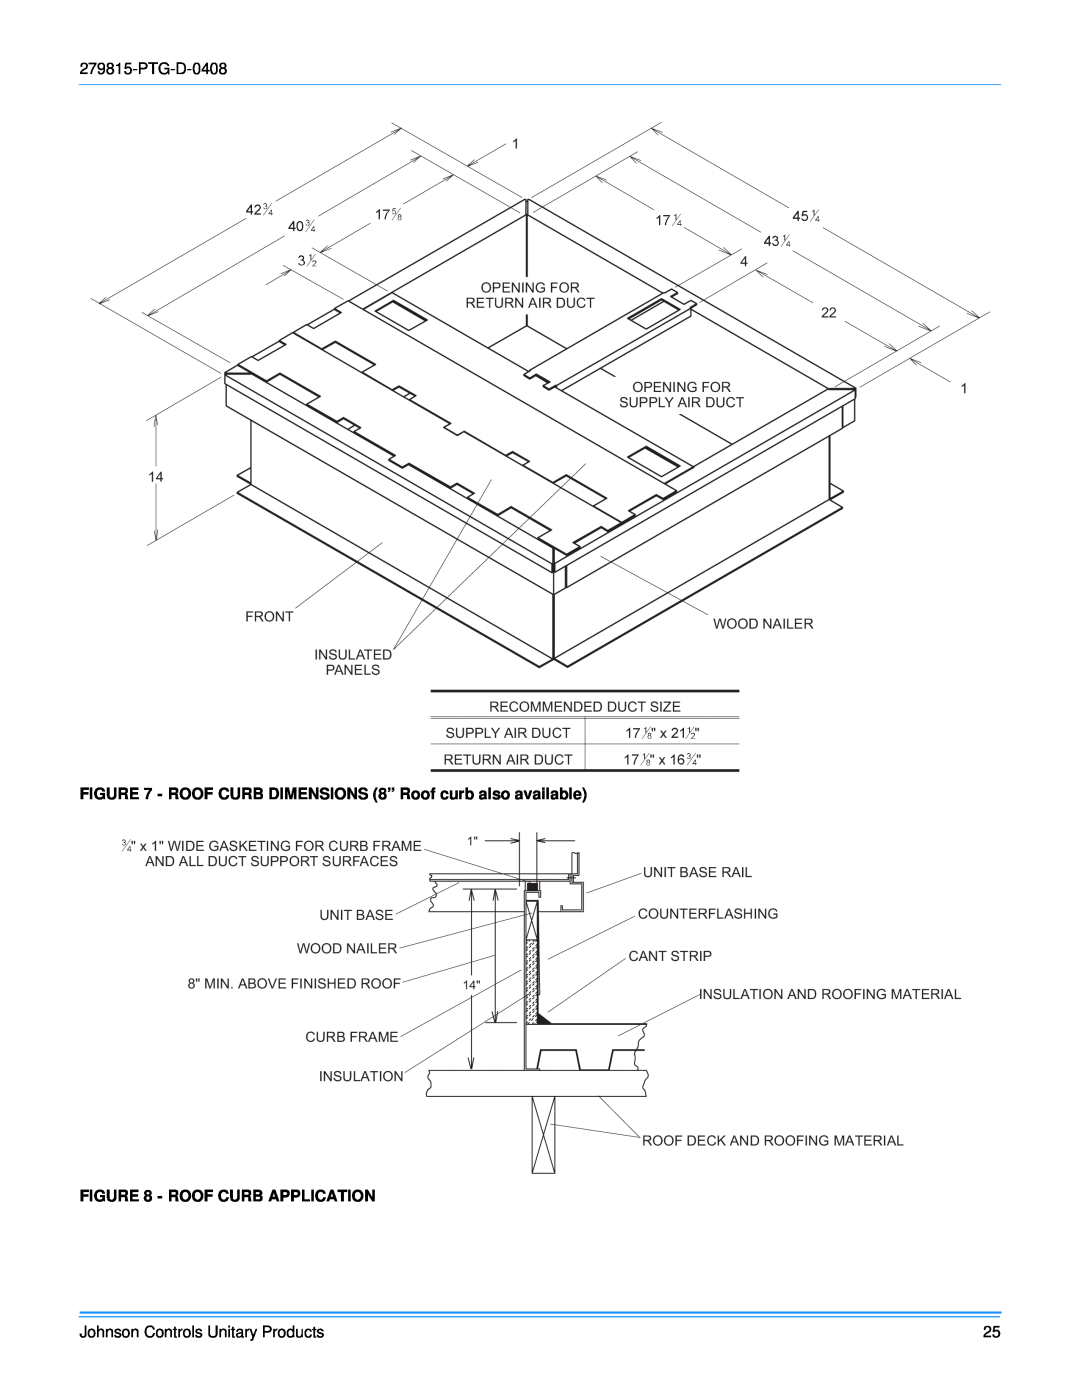 Johnson Controls ACPU024 THRU 060 manual PTG-D-0408, Roof Curb Application, Johnson Controls Unitary Products 